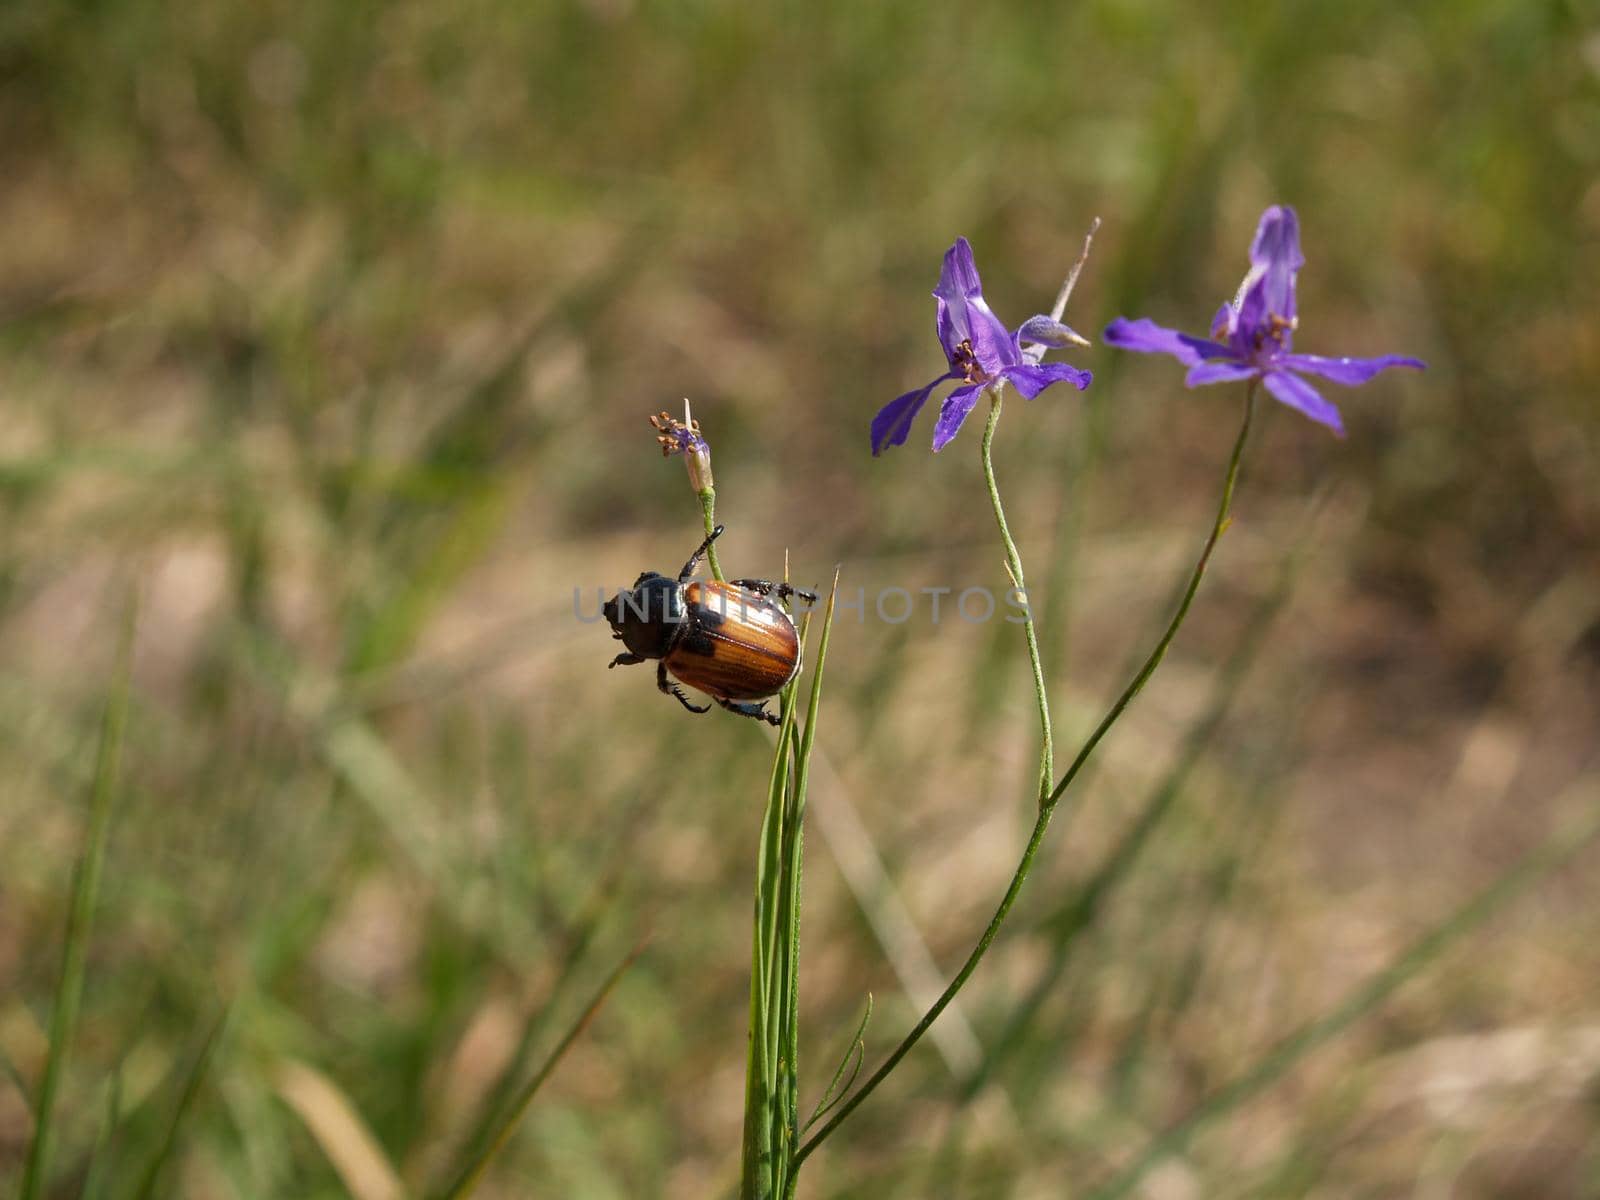 Anisoplia segetum. The beetle hangs on the stem of the flower. Beetle acrobat. The beetle holds onto the flower.